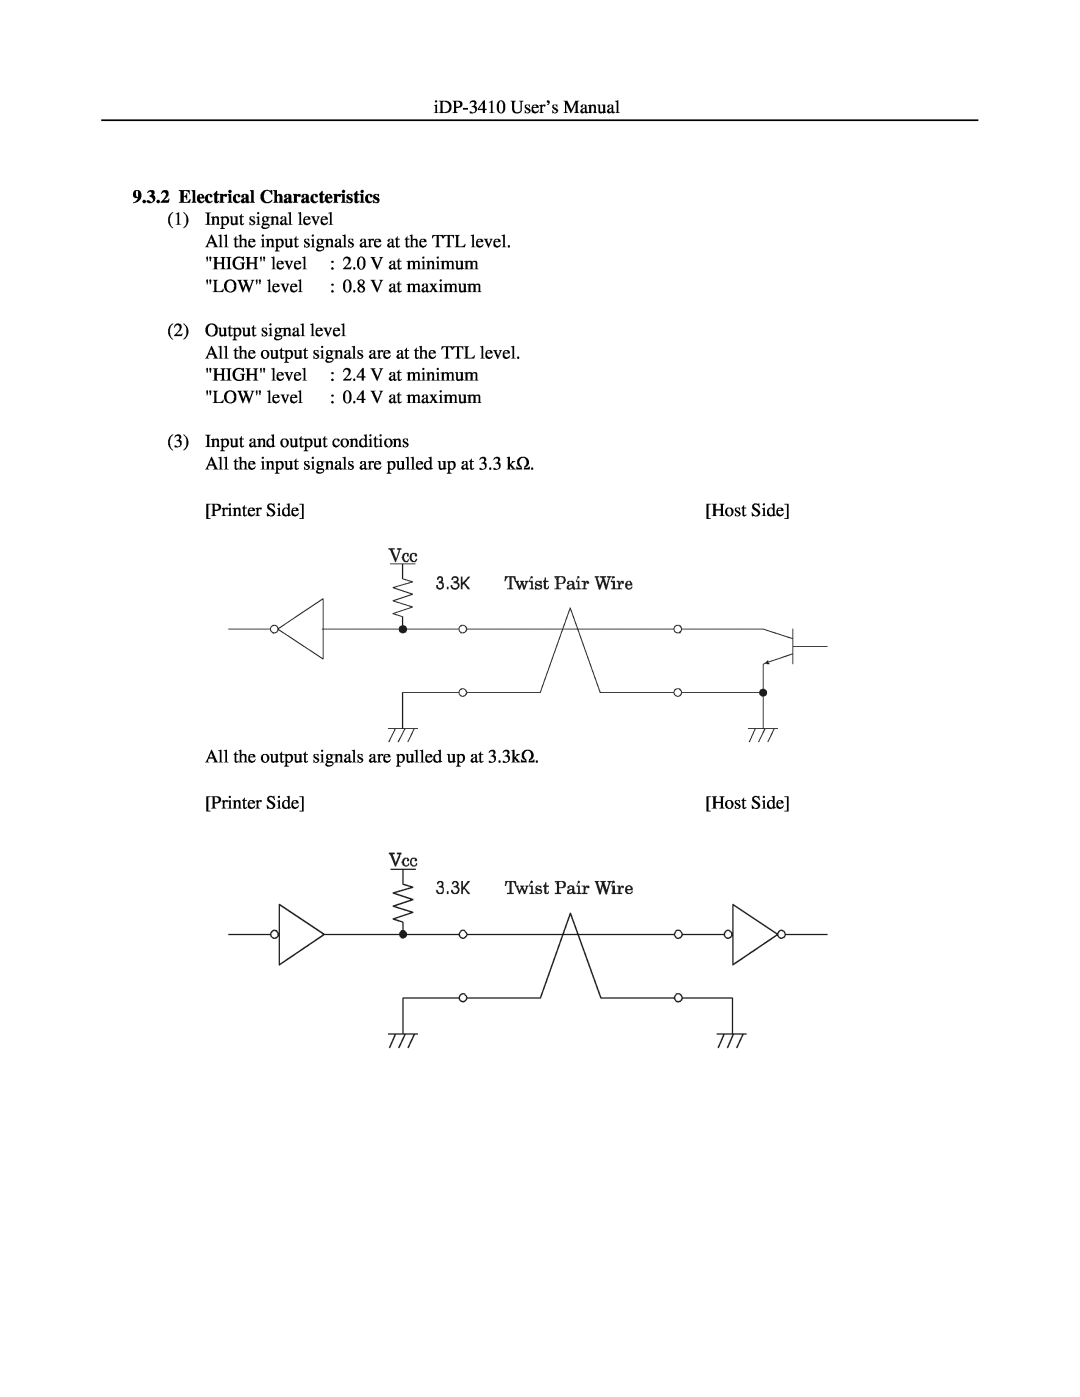 Addlogix iDP-3410 user manual Electrical Characteristics 